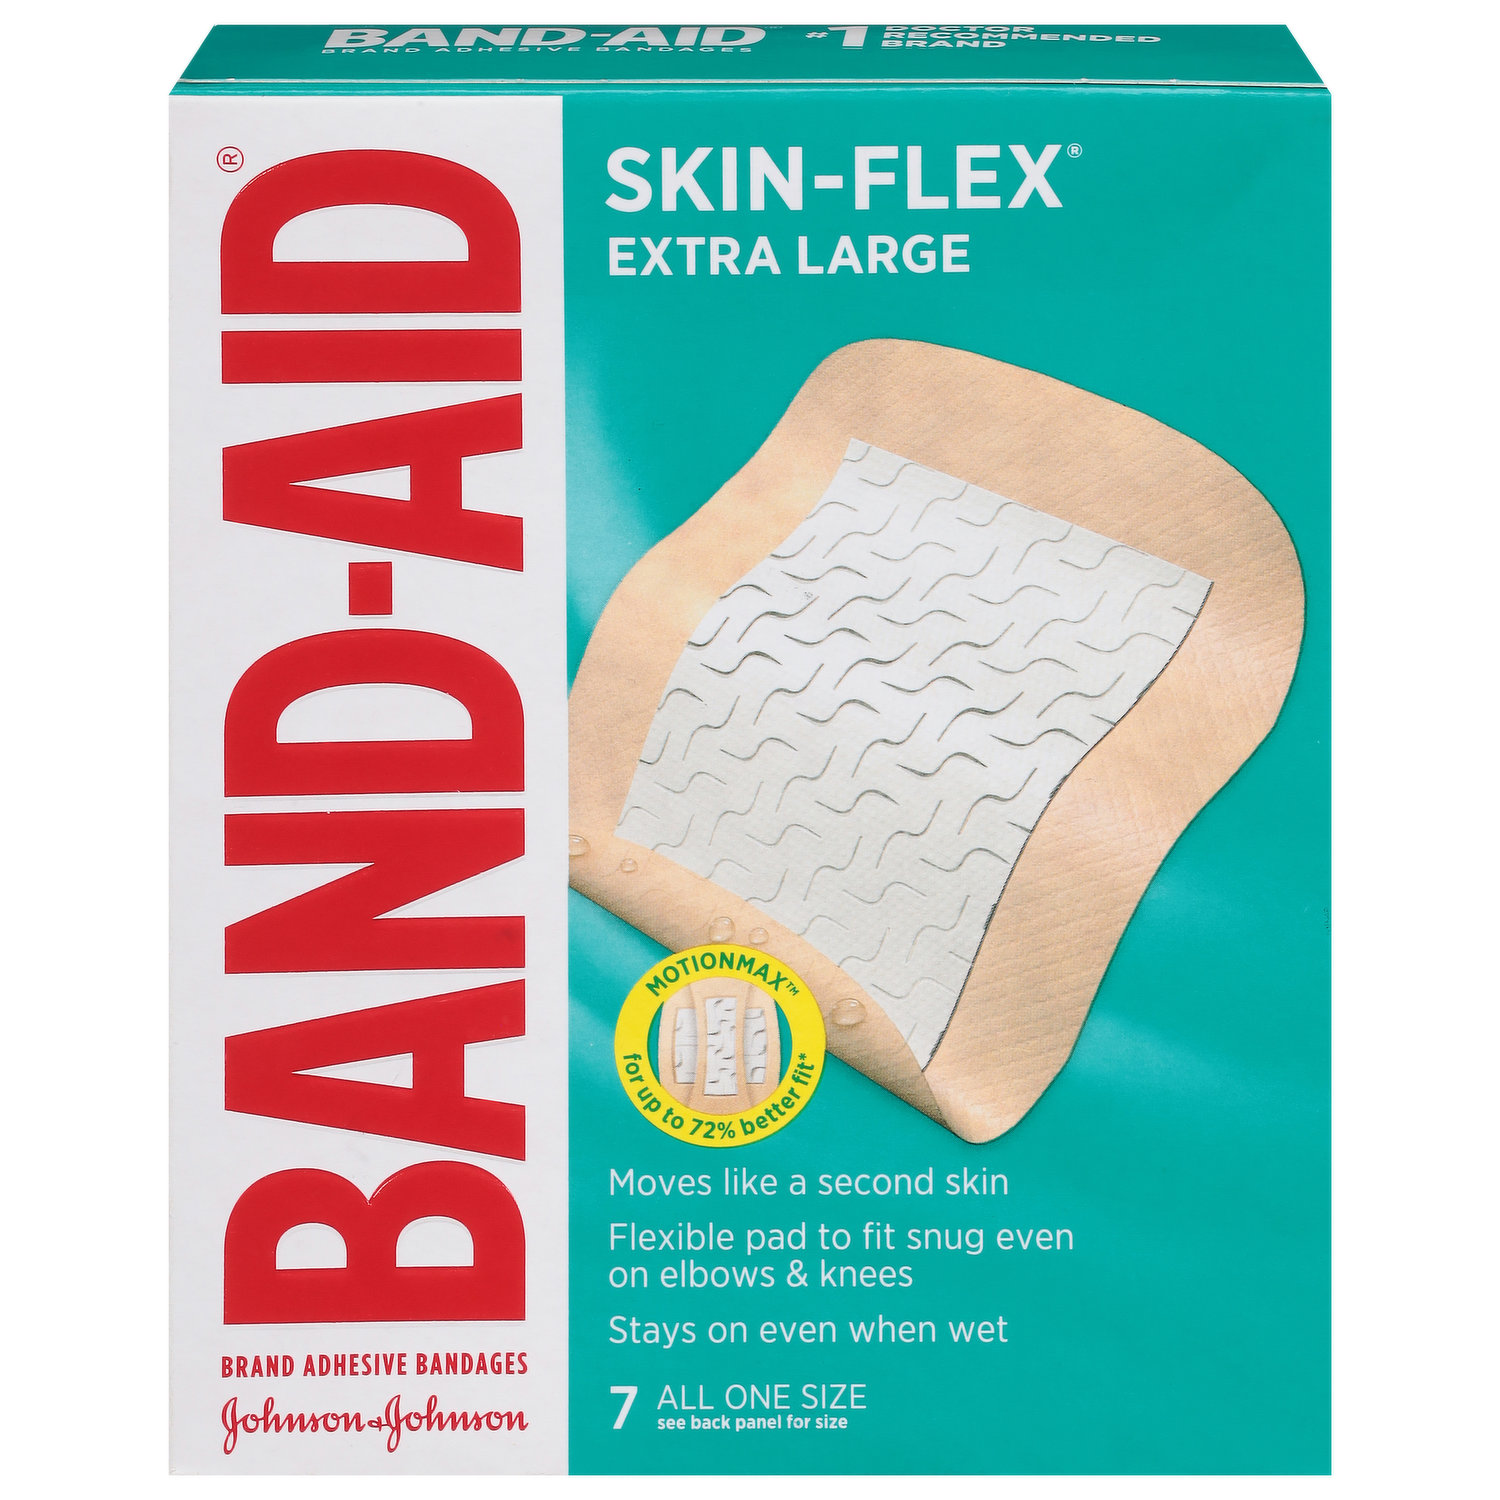 Silipos Gel-E-Roll Elastic Bandage 4 x 4' #10355 - MD Buying Group